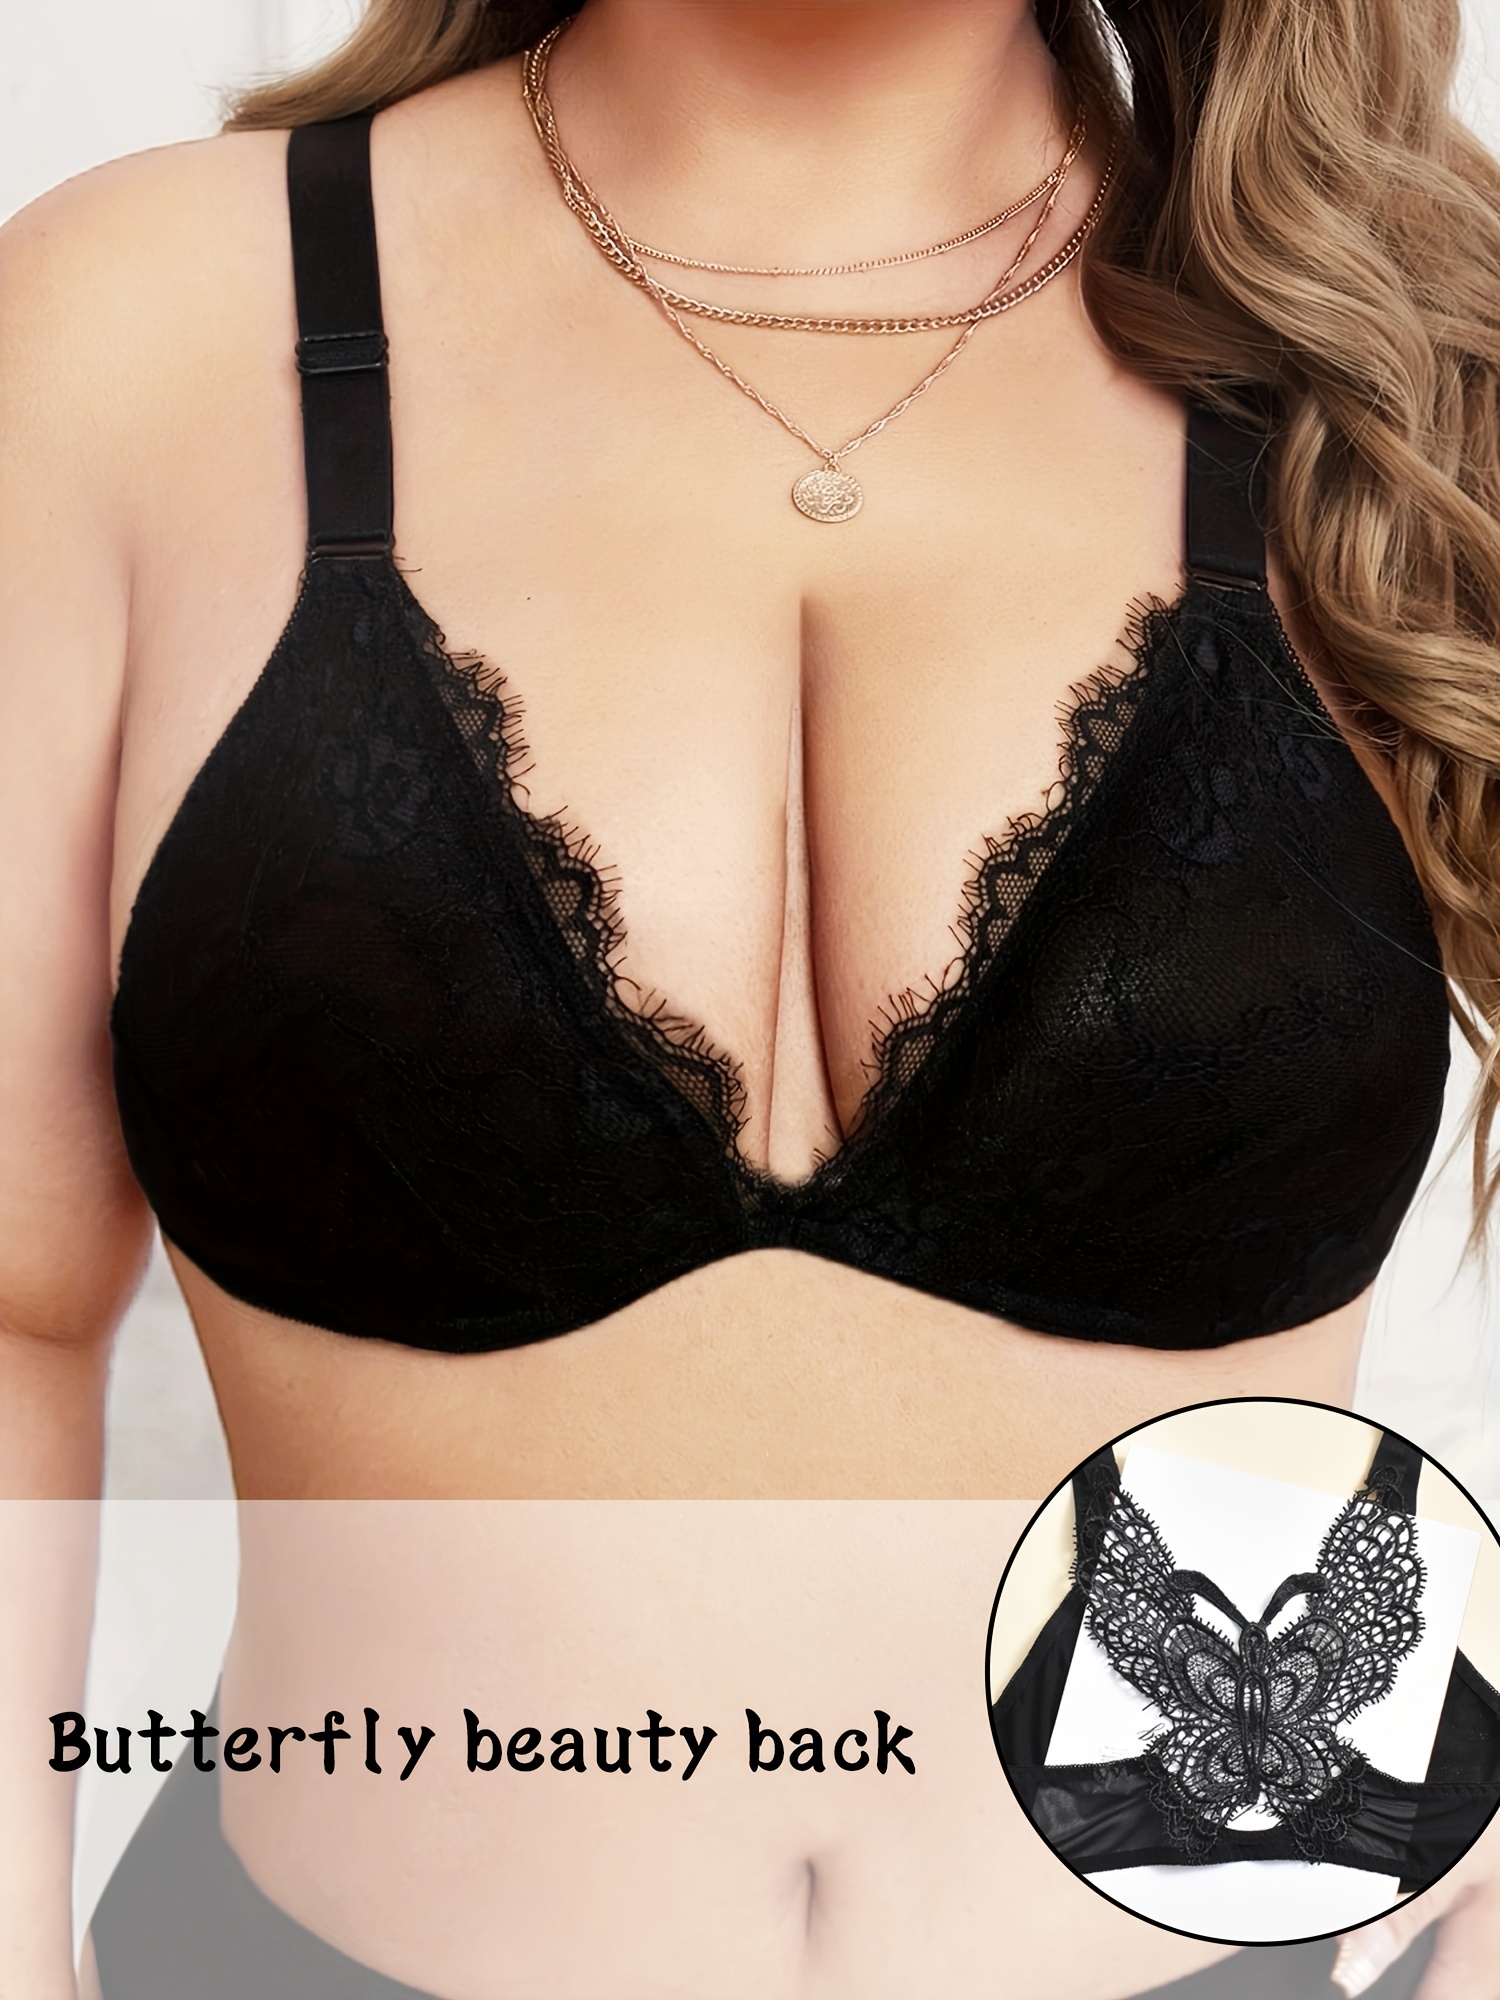 Butterfly beauty back lingerie super push up bra set for women Front buckle  bras